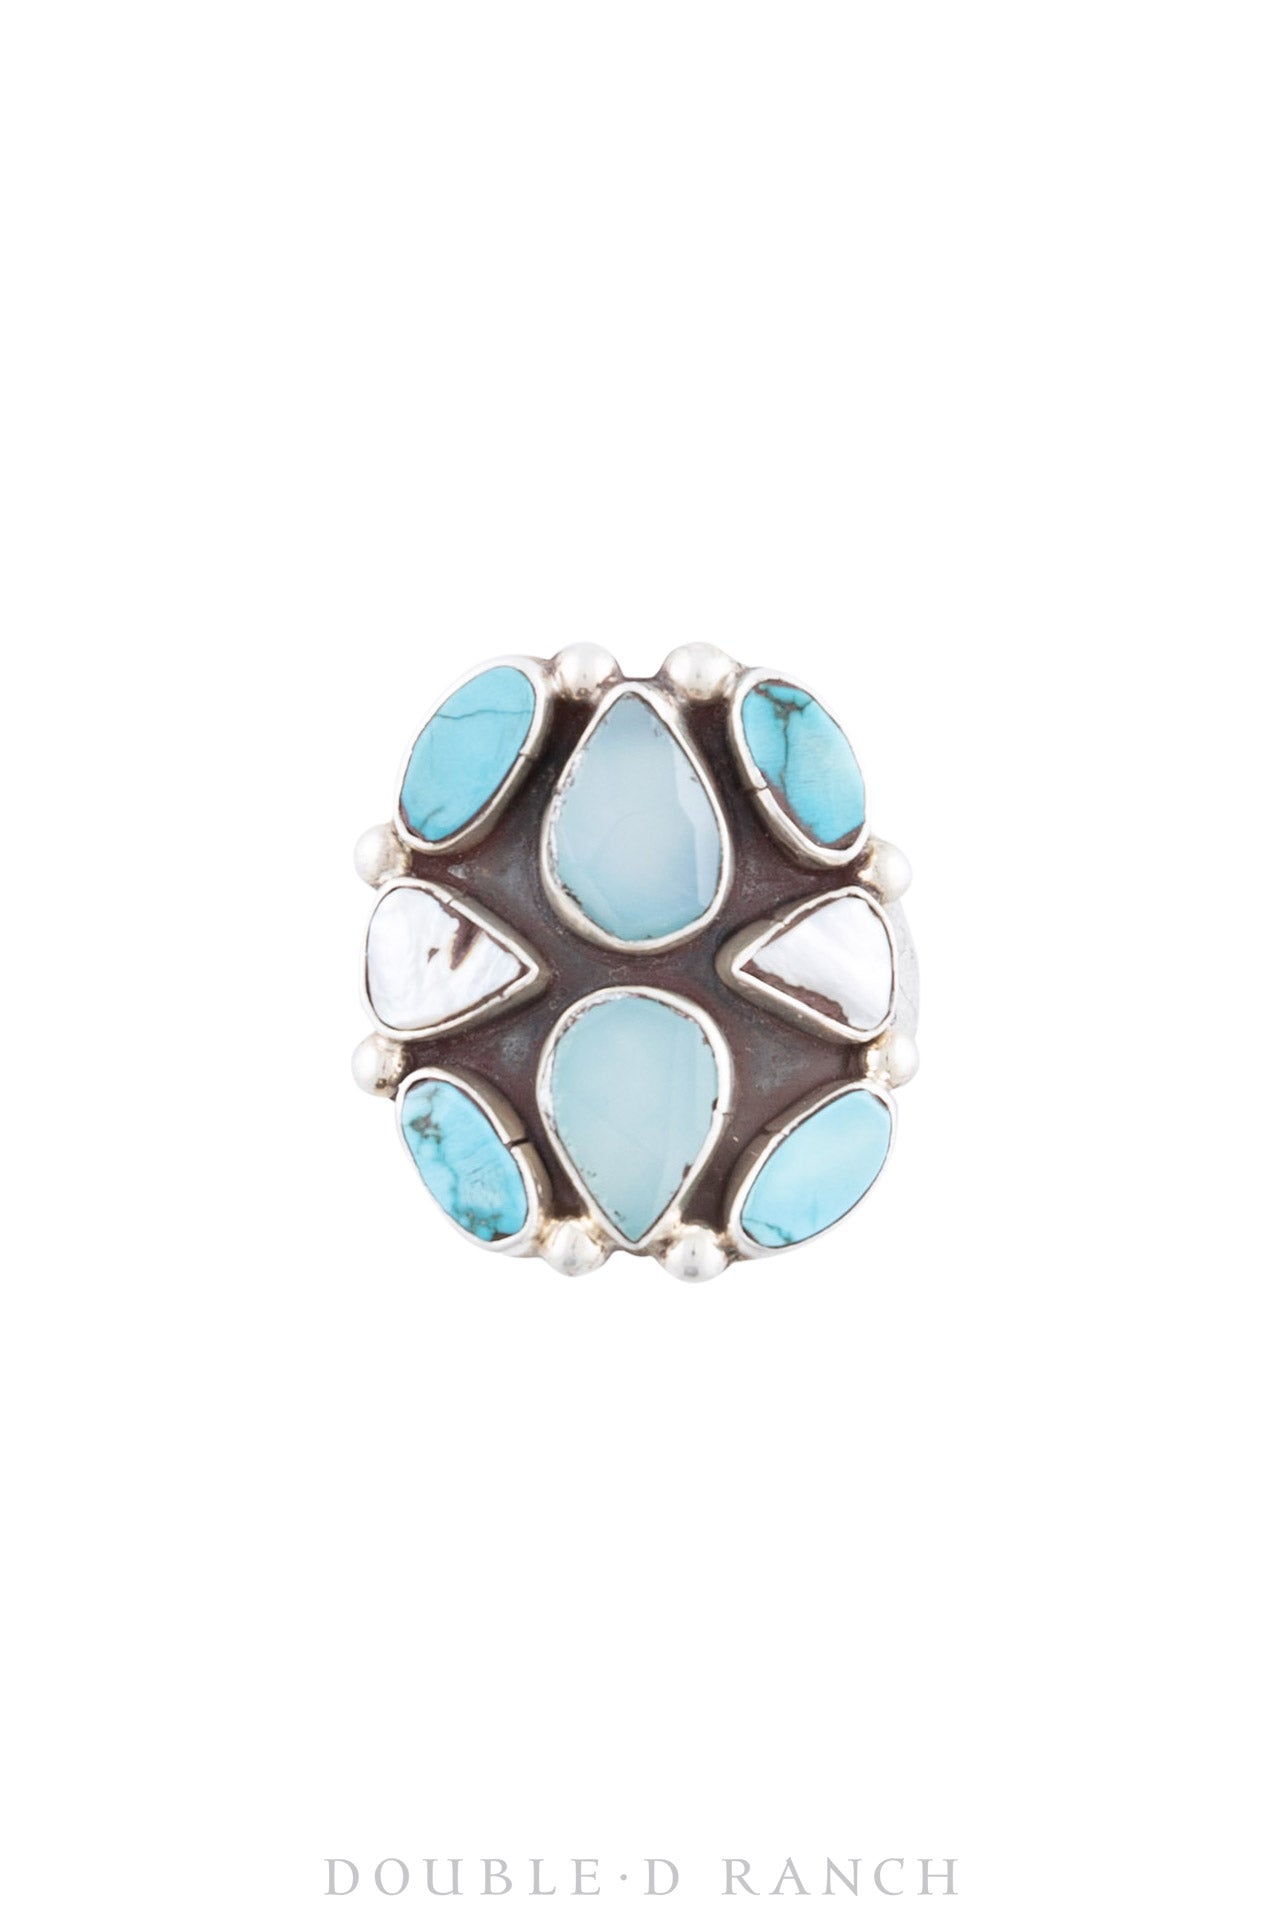 Ring, Oscar Betz, Turquoise, Aquamarine, Mother of Pearl, Hallmark, 989